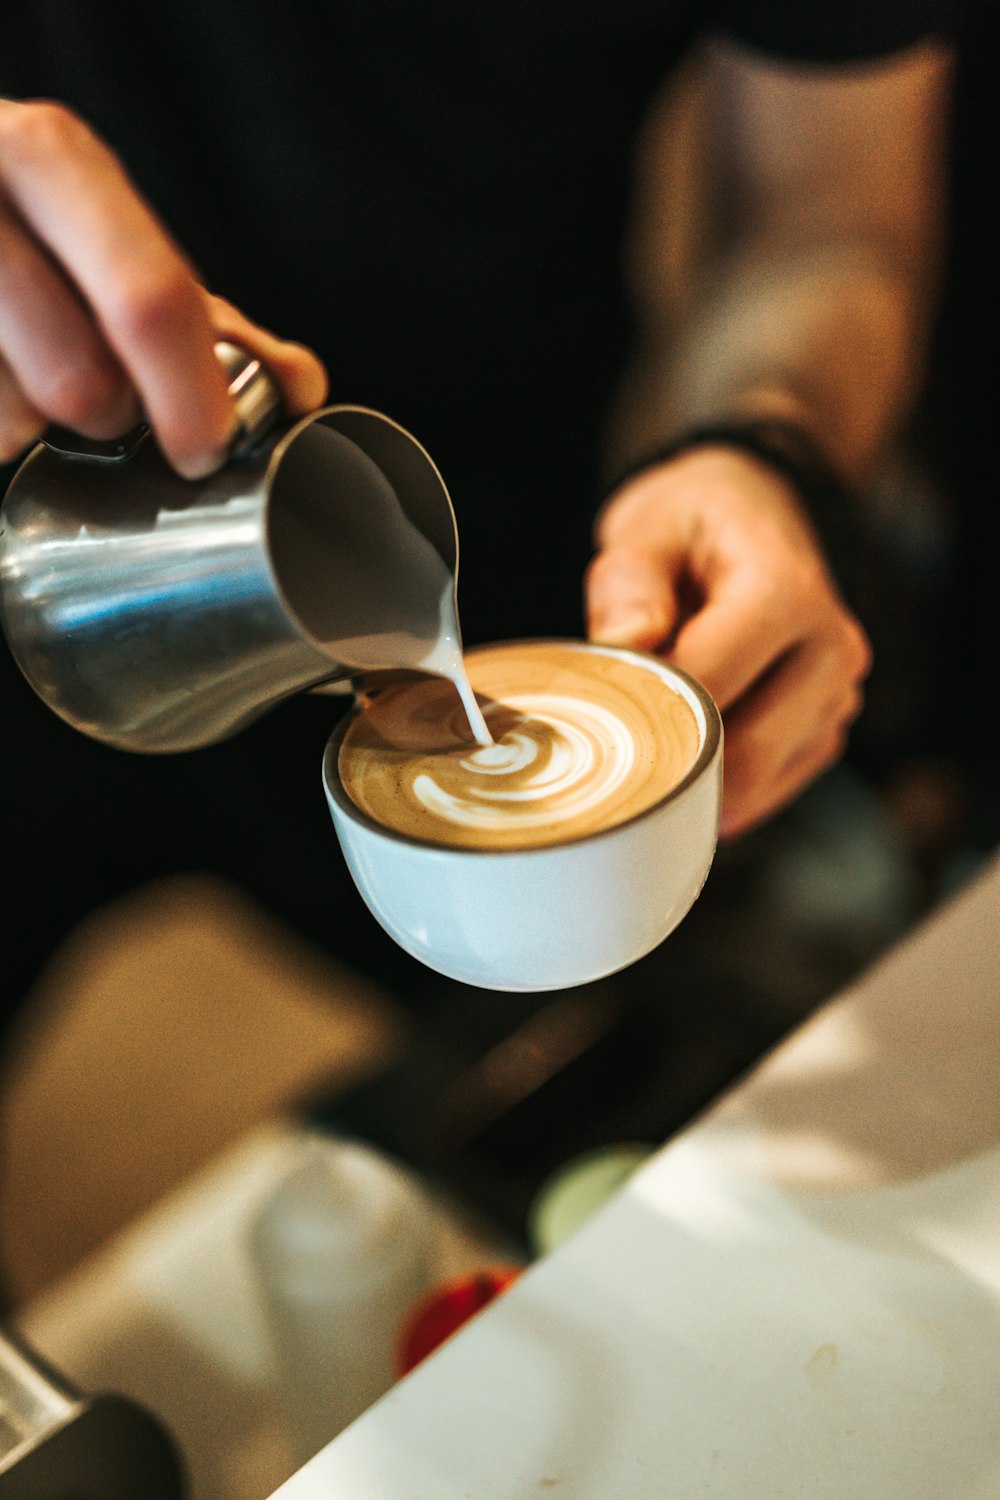 person preparing latte with art